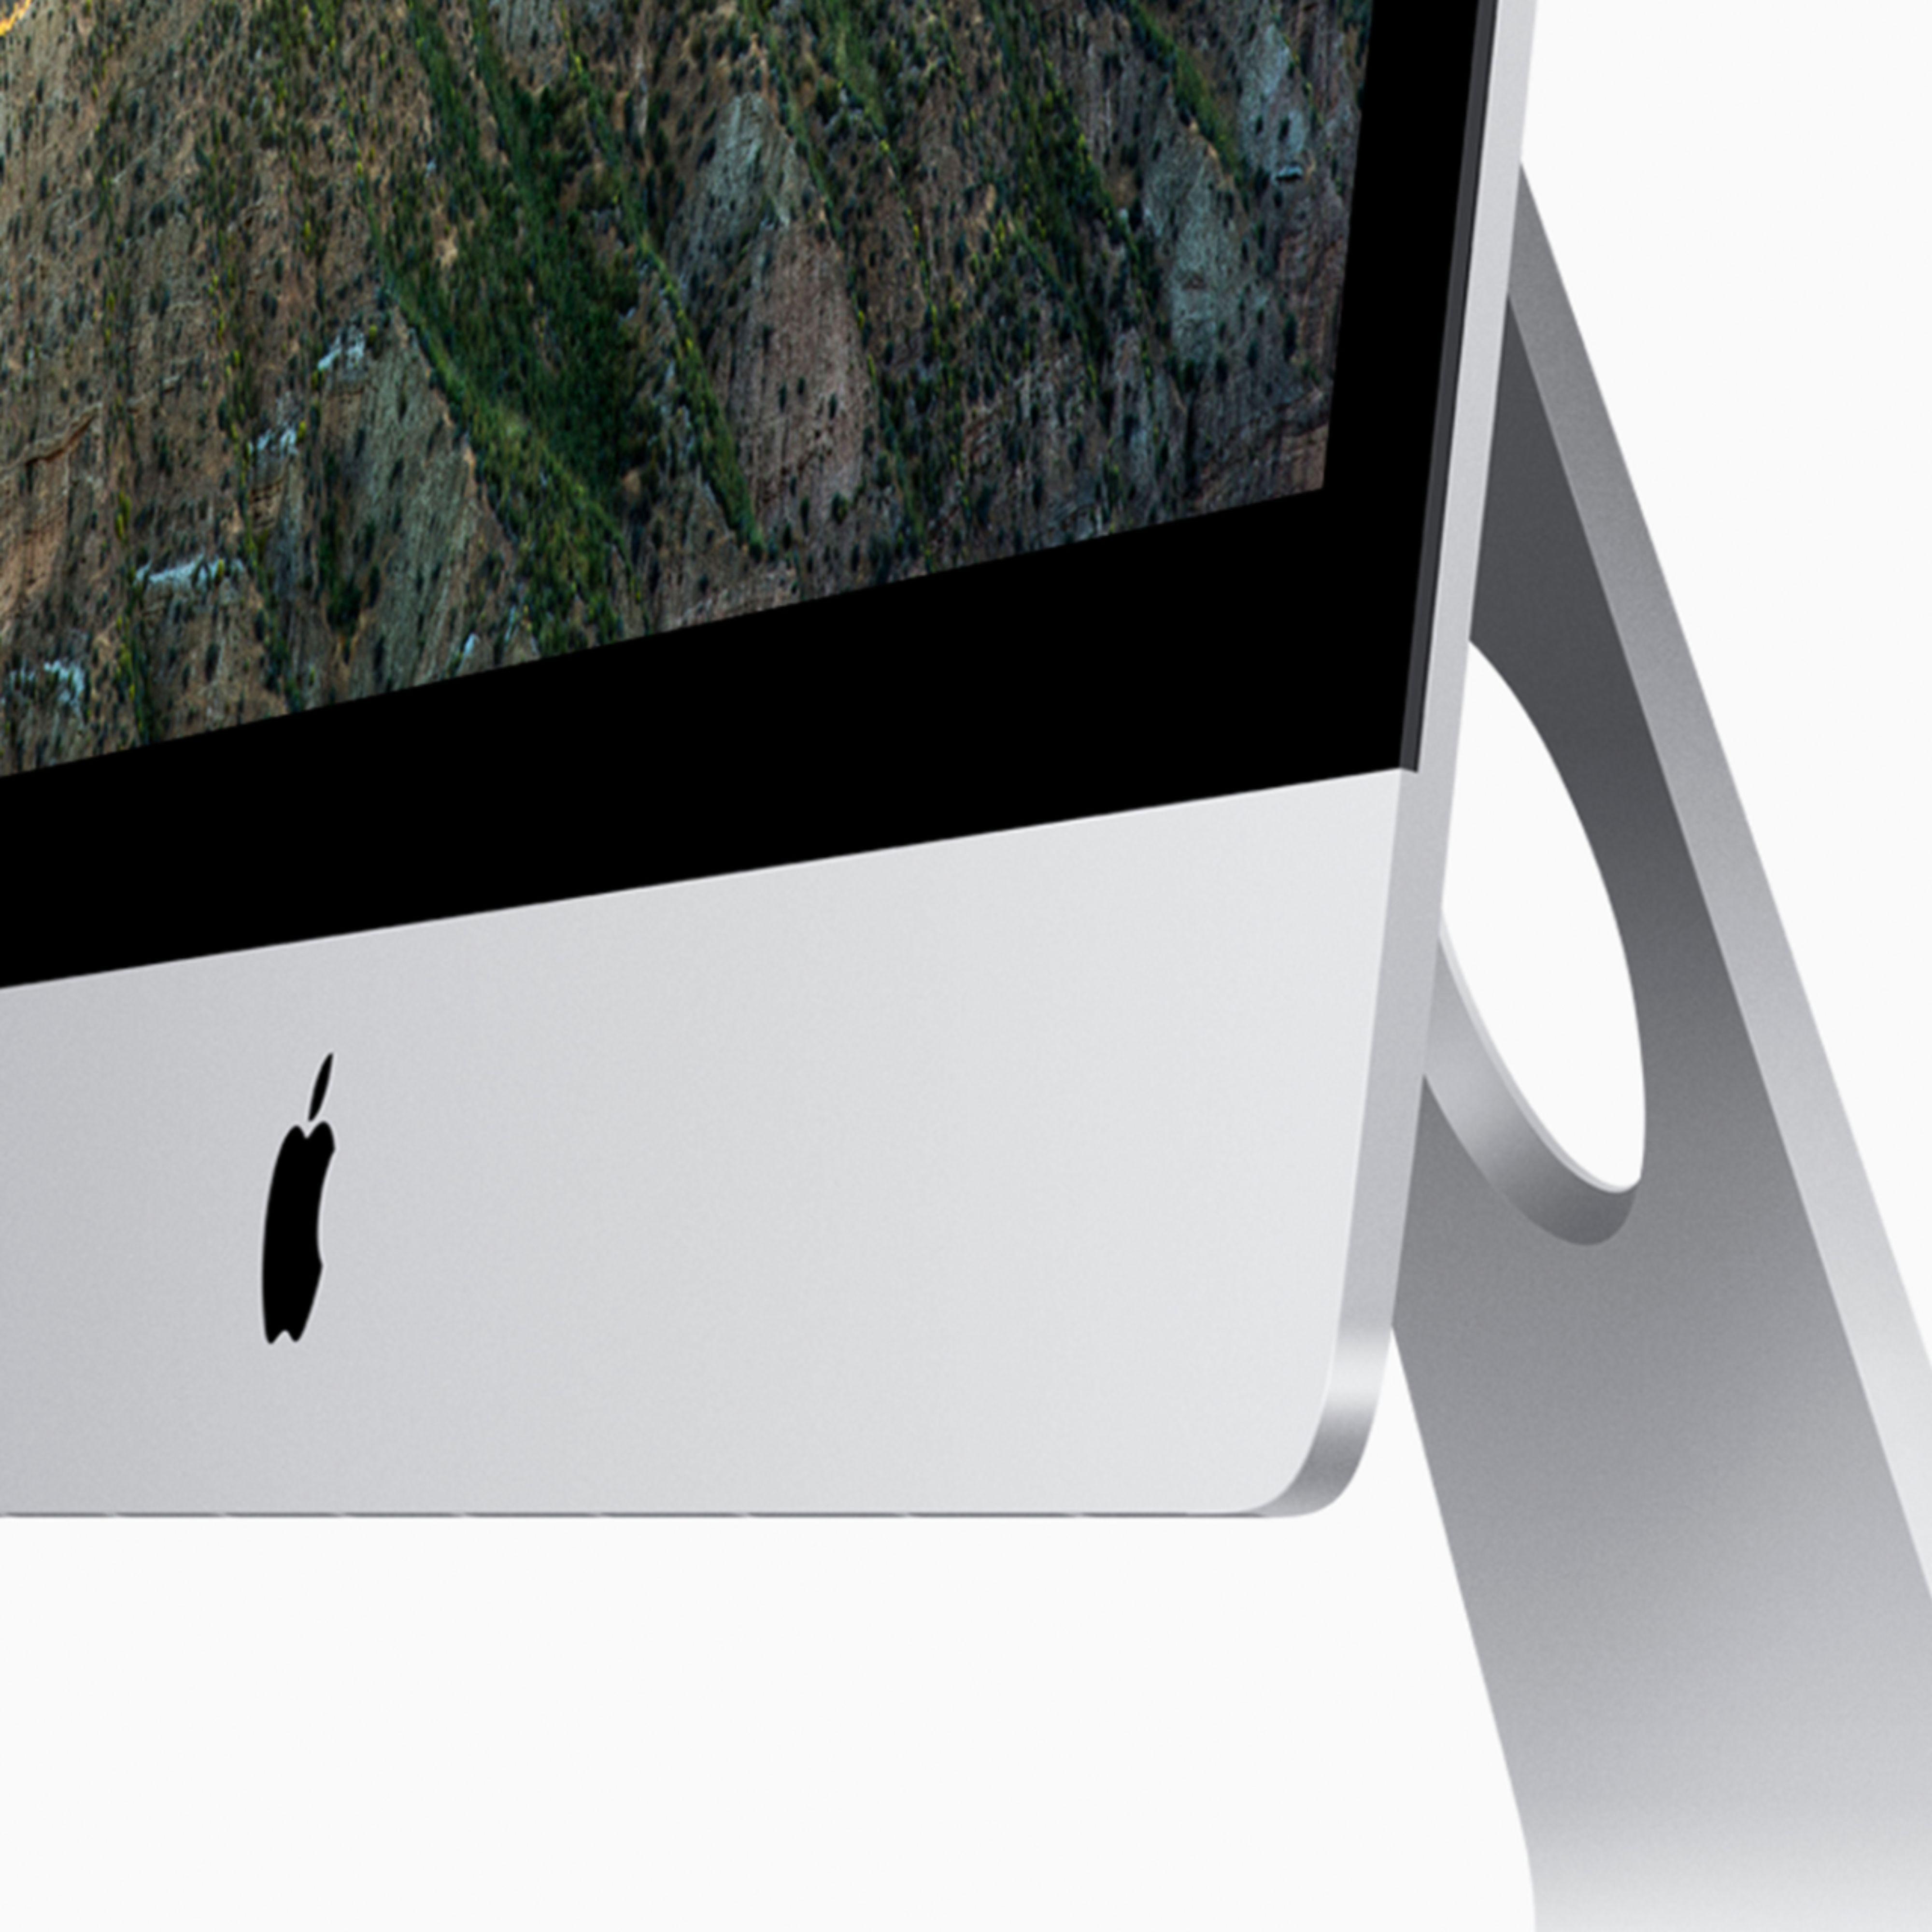 Apple 27" iMac MRR12LL/A, Intel Core i5, 8GB RAM, 2TB HDD, Silver - Refurbished Good